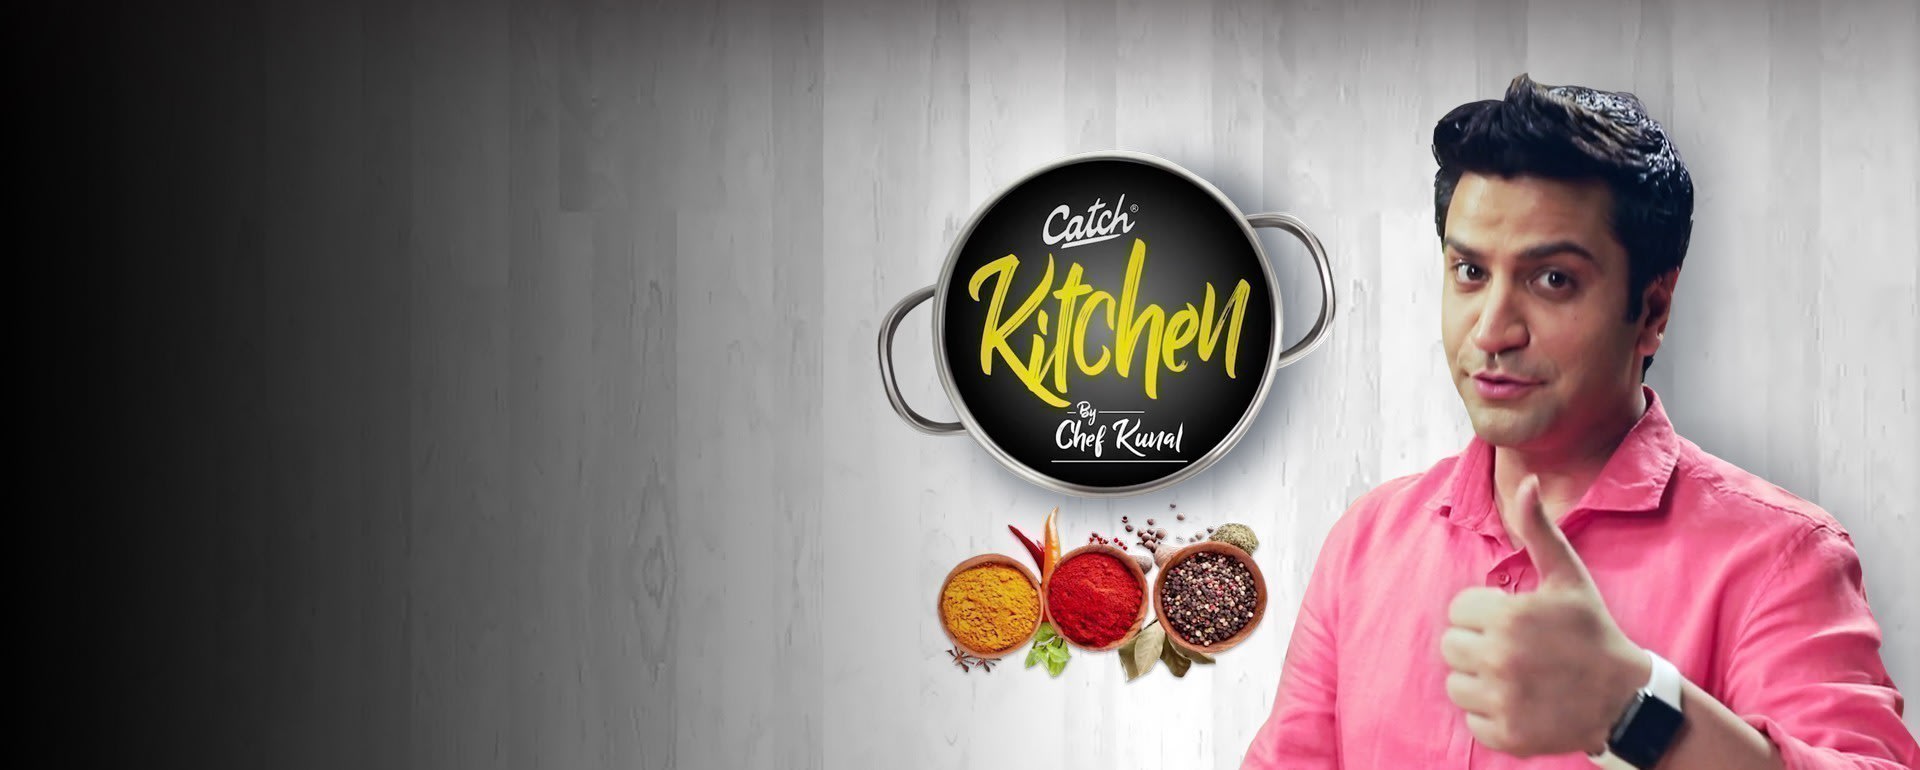 Catch Kitchen by Chef Kunal Kapur